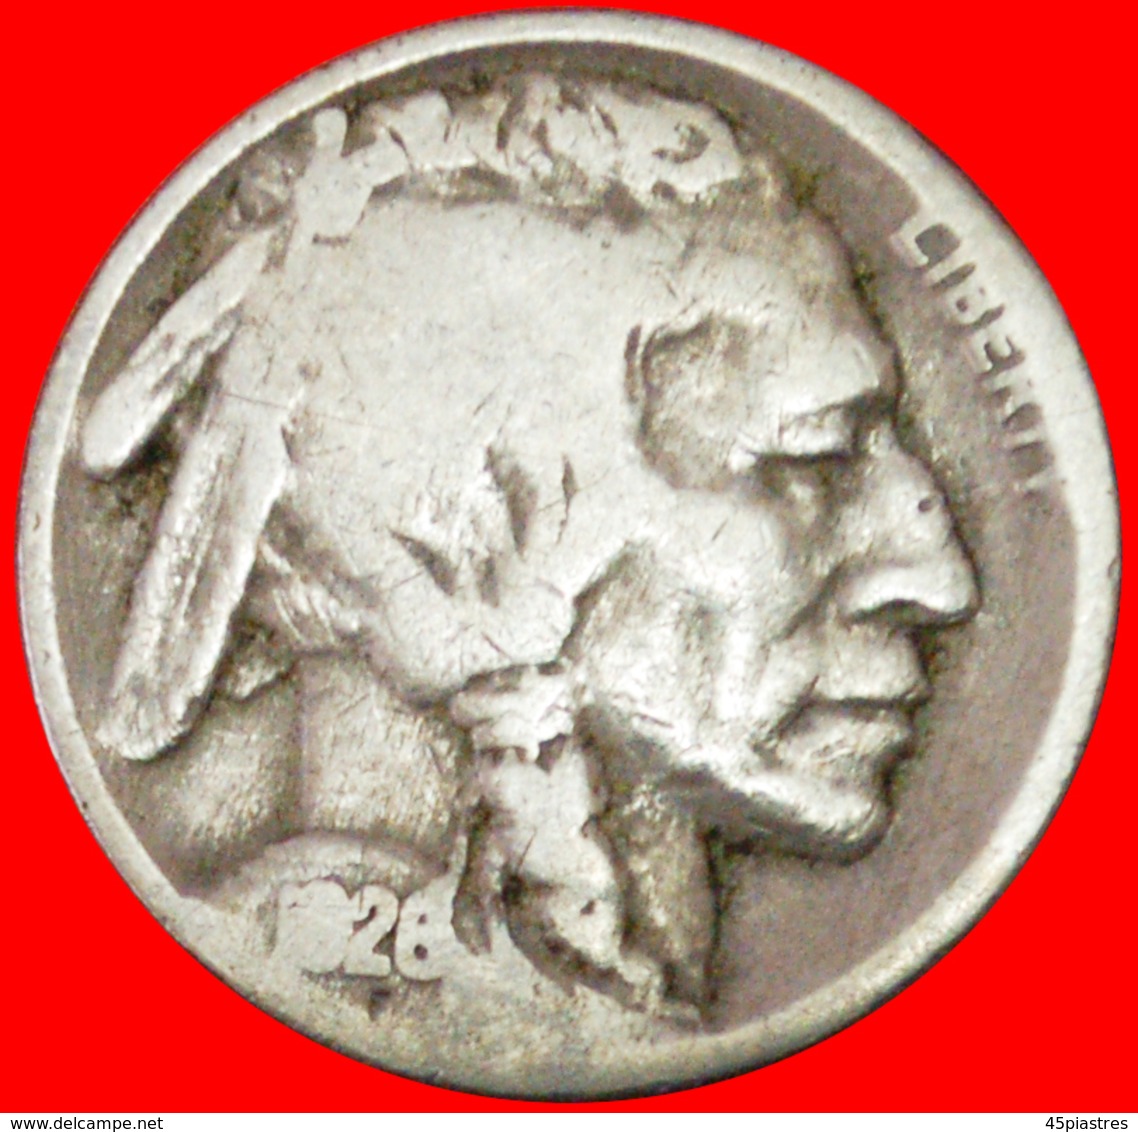 # INDIAN HEAD (1913-1938): USA ★ 5 CENTS 1926 BLACK DIAMOND (1893-1915)! LOW START ★ NO RESERVE! - 1913-1938: Buffalo